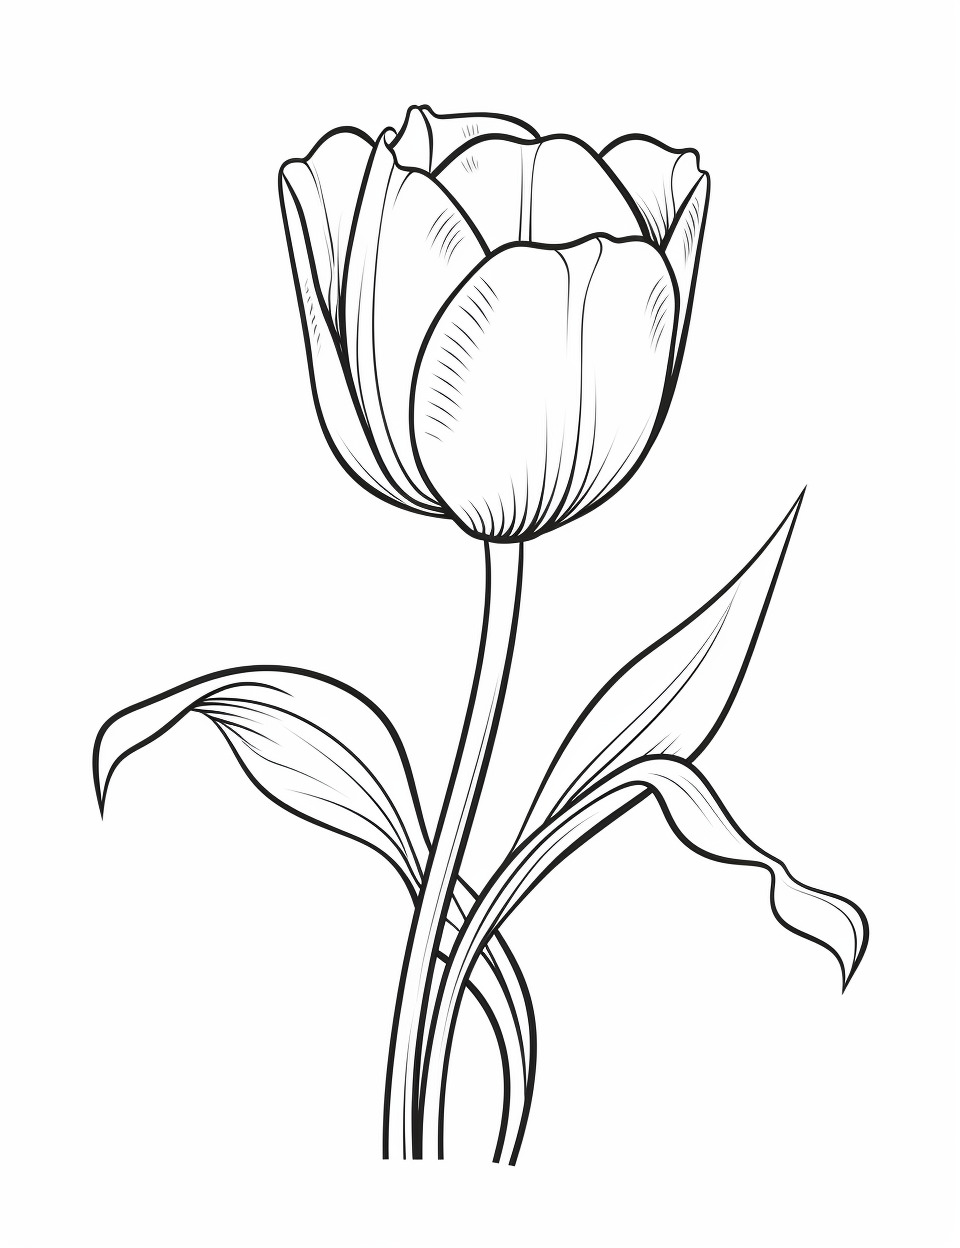 Tulip Coloring Sheets (Free & Printable)